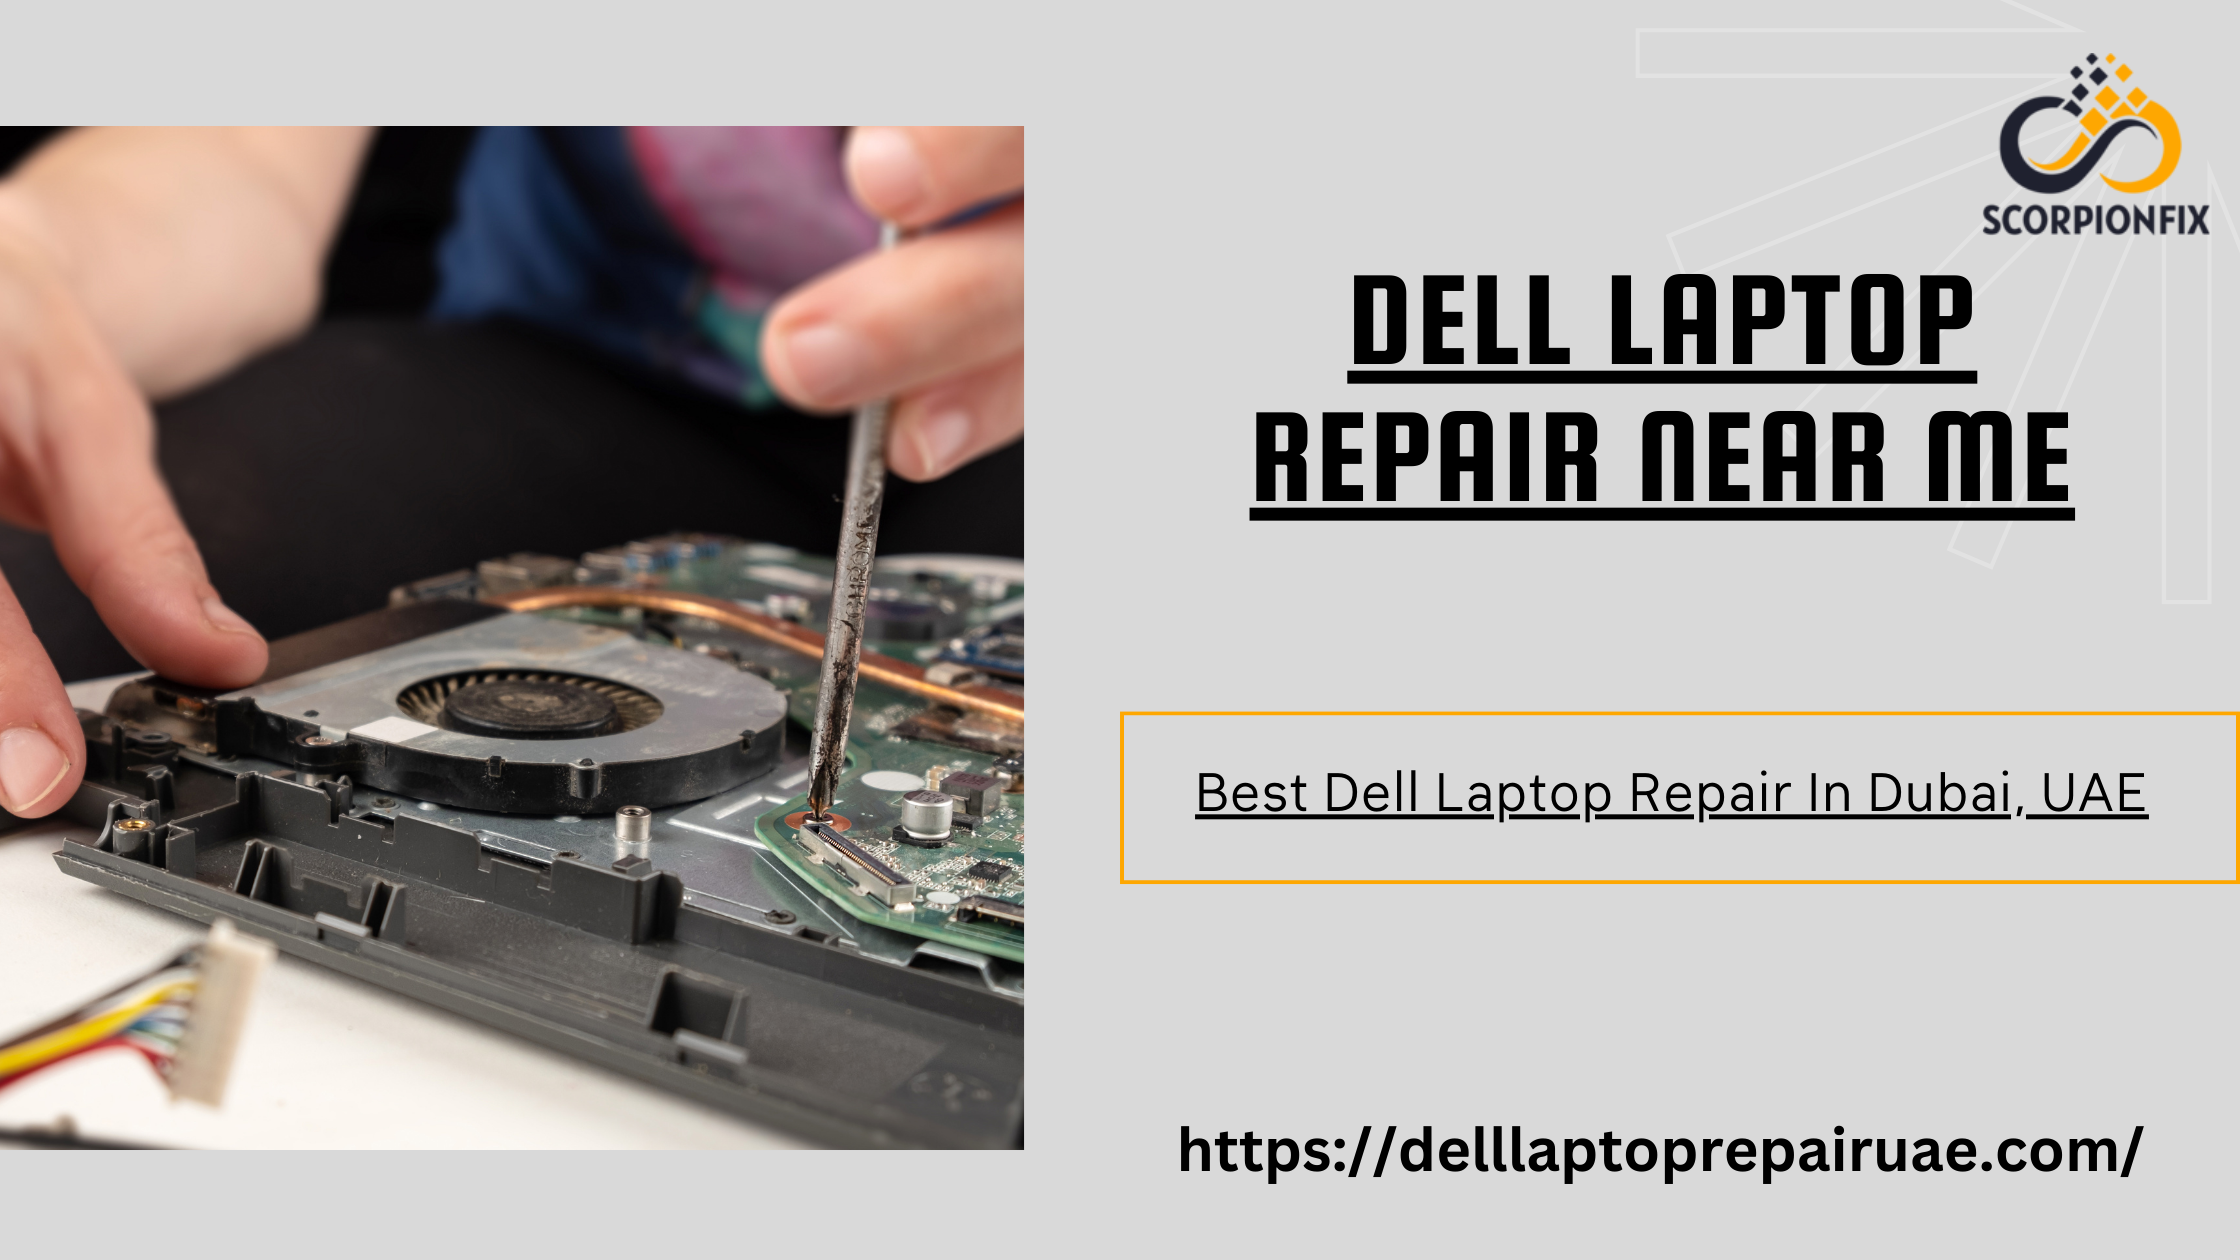 Efficient Dell Laptop Repair Services Near Me in Dubai